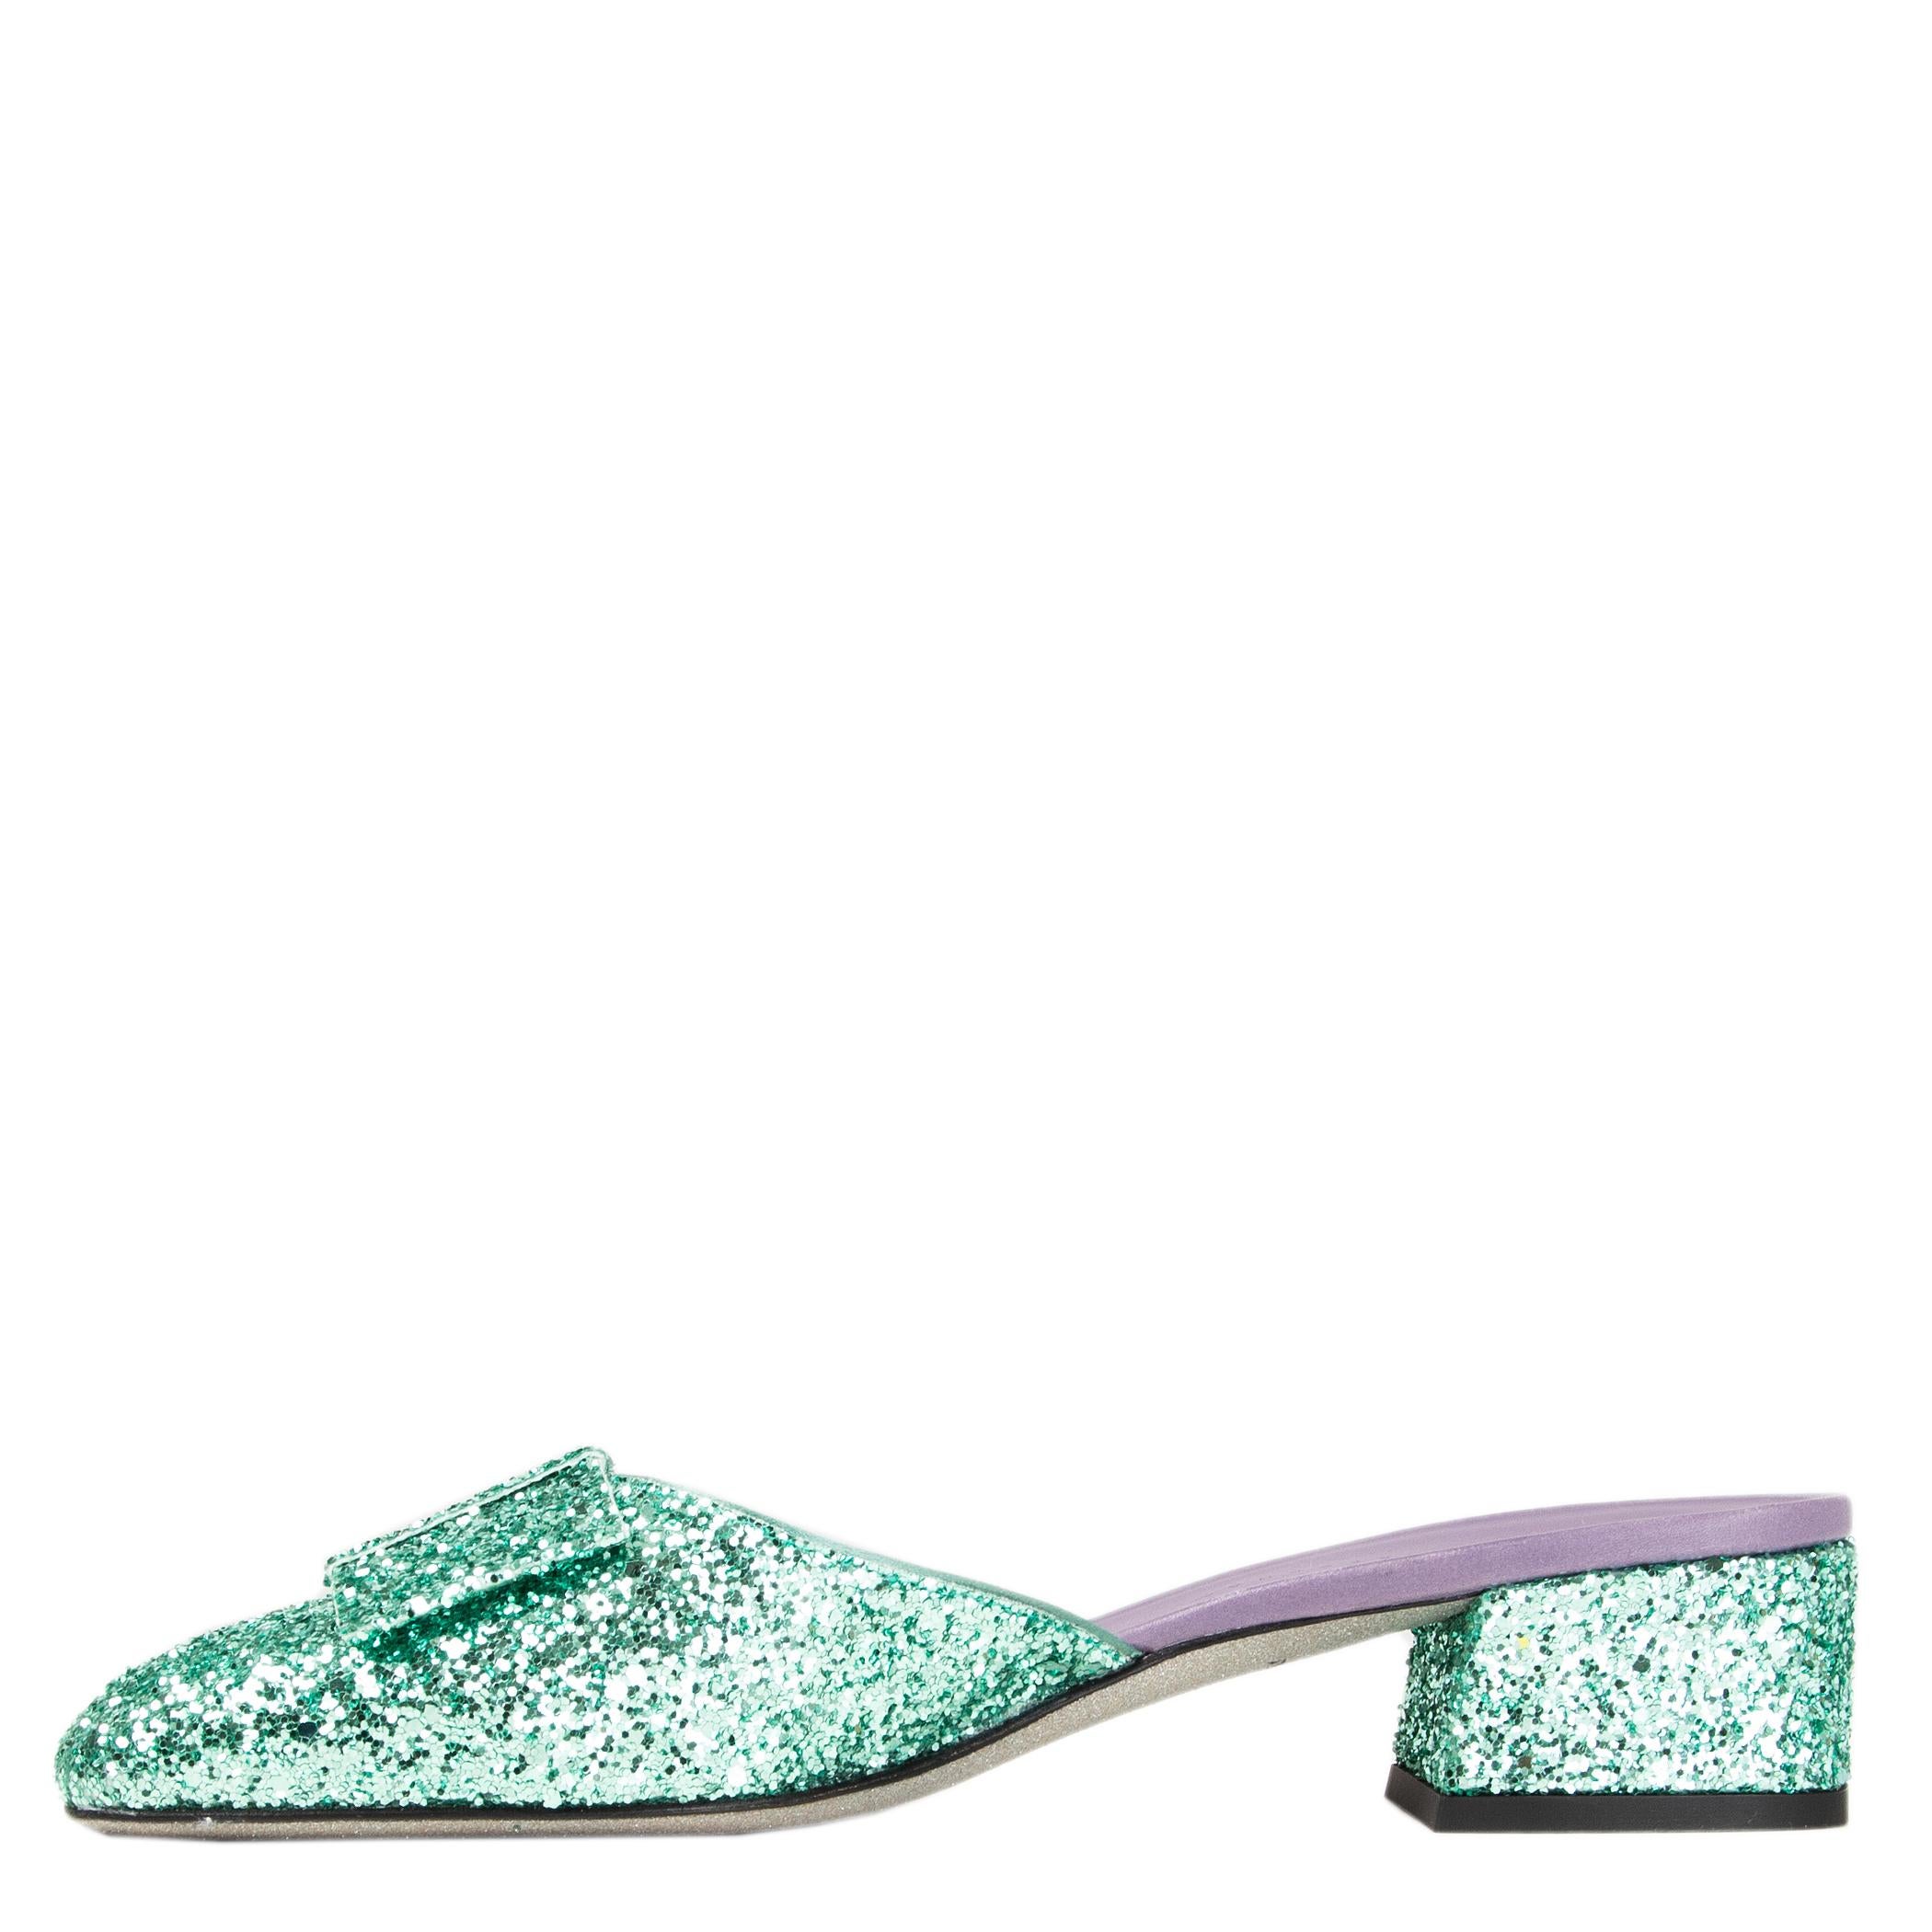 Green VICTORIA BECKHAM mint green GLITTER HARPER Mules Shoes 39.5 For Sale